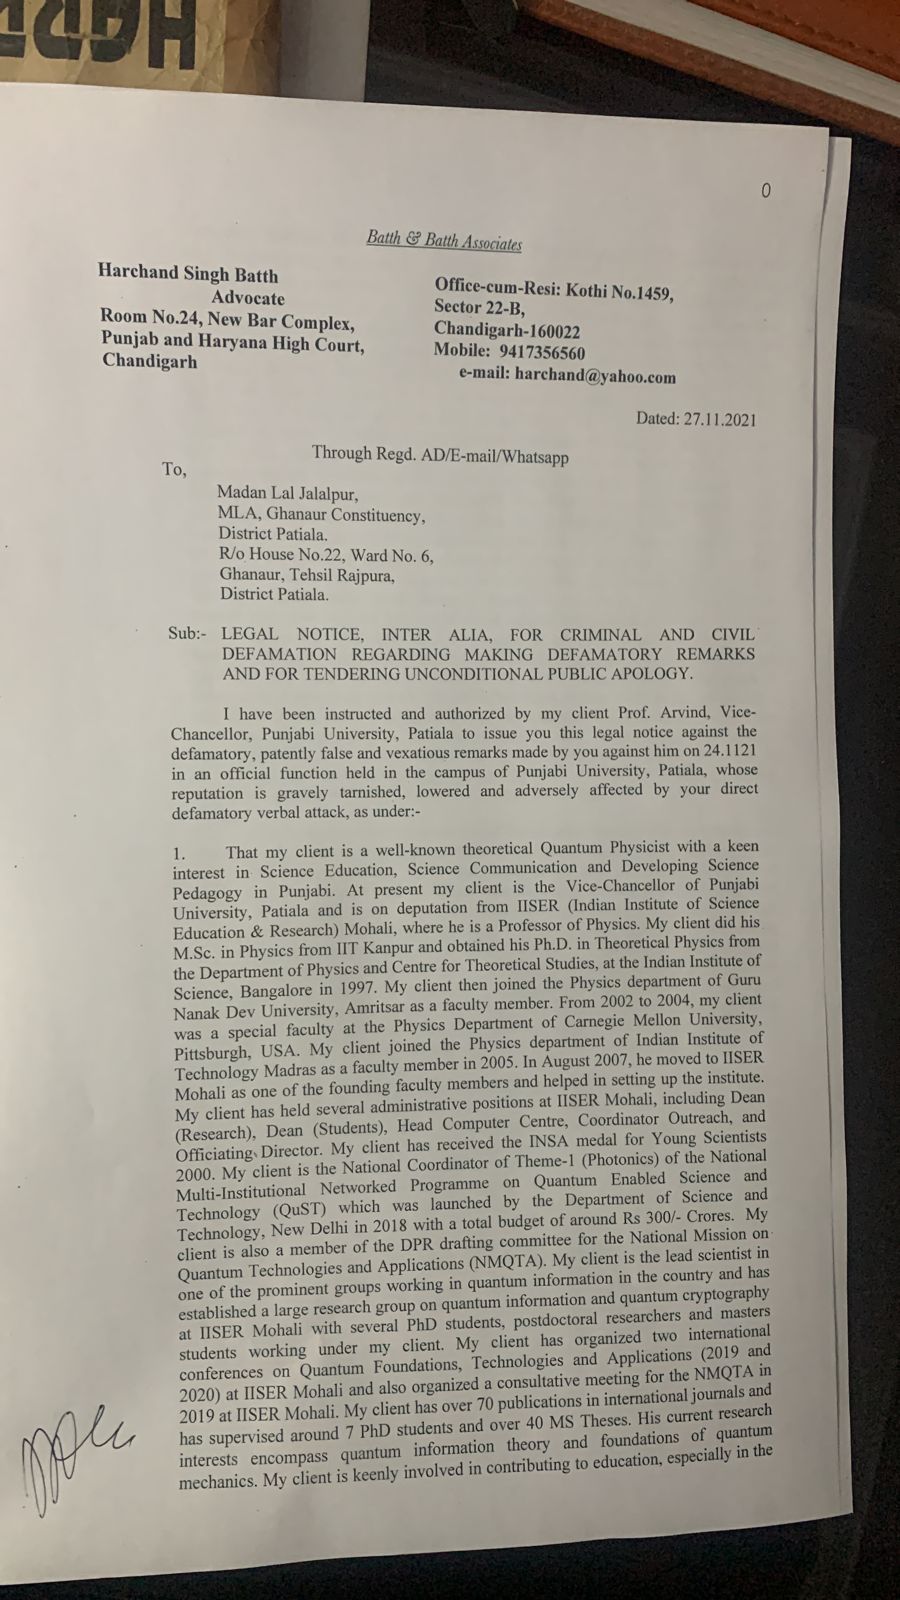 Punjab University VC Prof Arvind defamation Notice to MLA Jalalpur